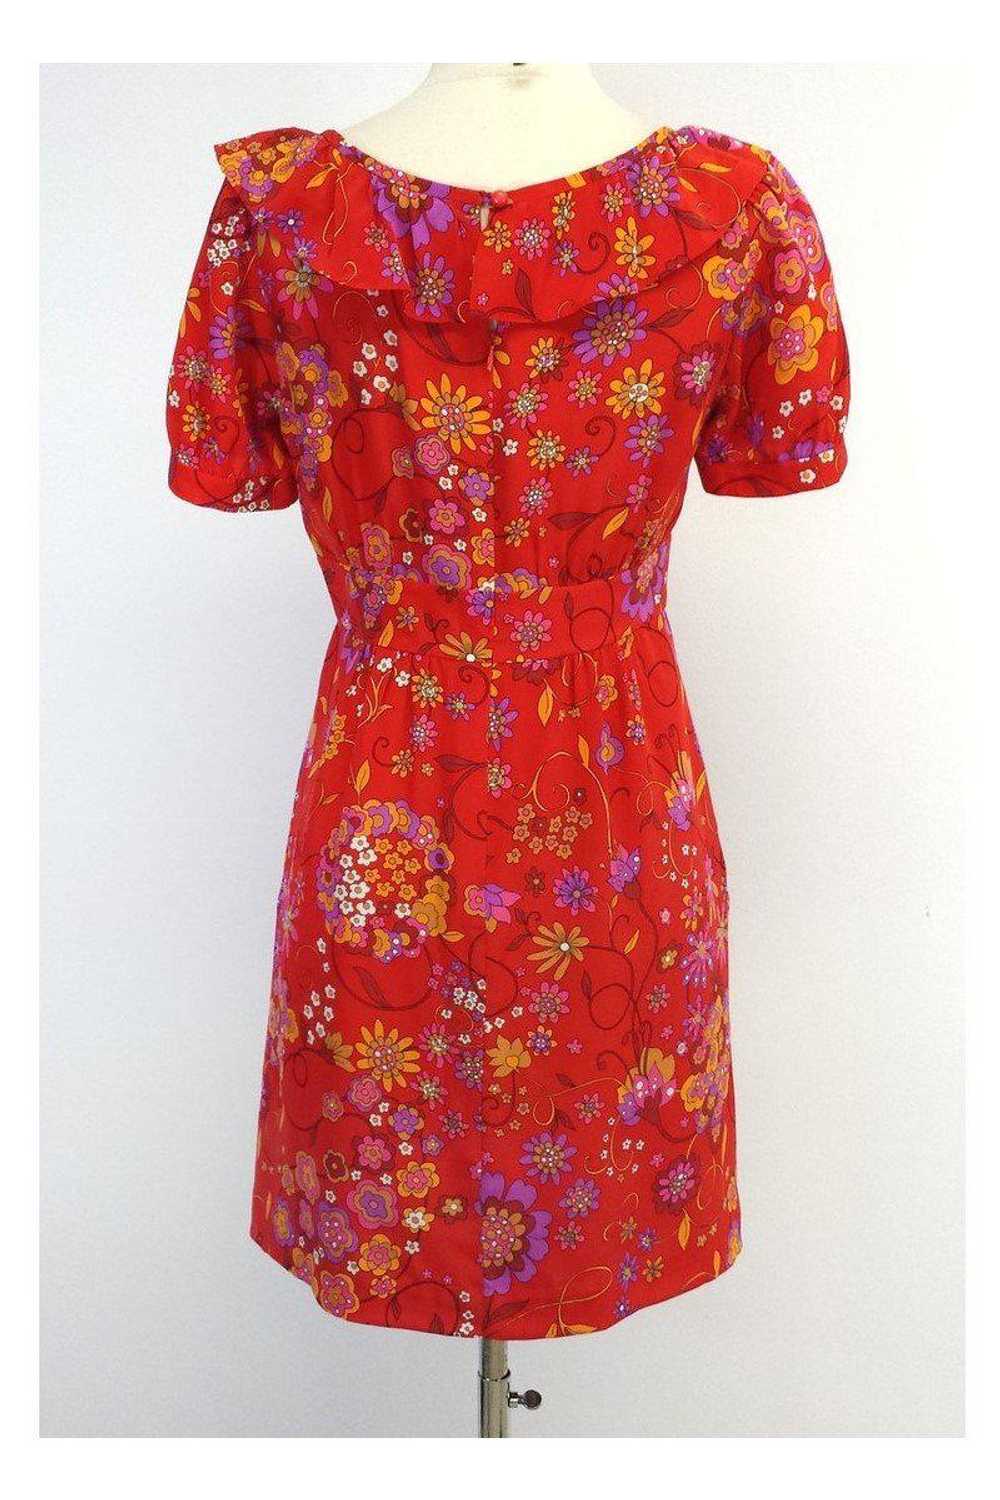 Tibi - Red Floral Print Silk Dress Sz 4 - image 3